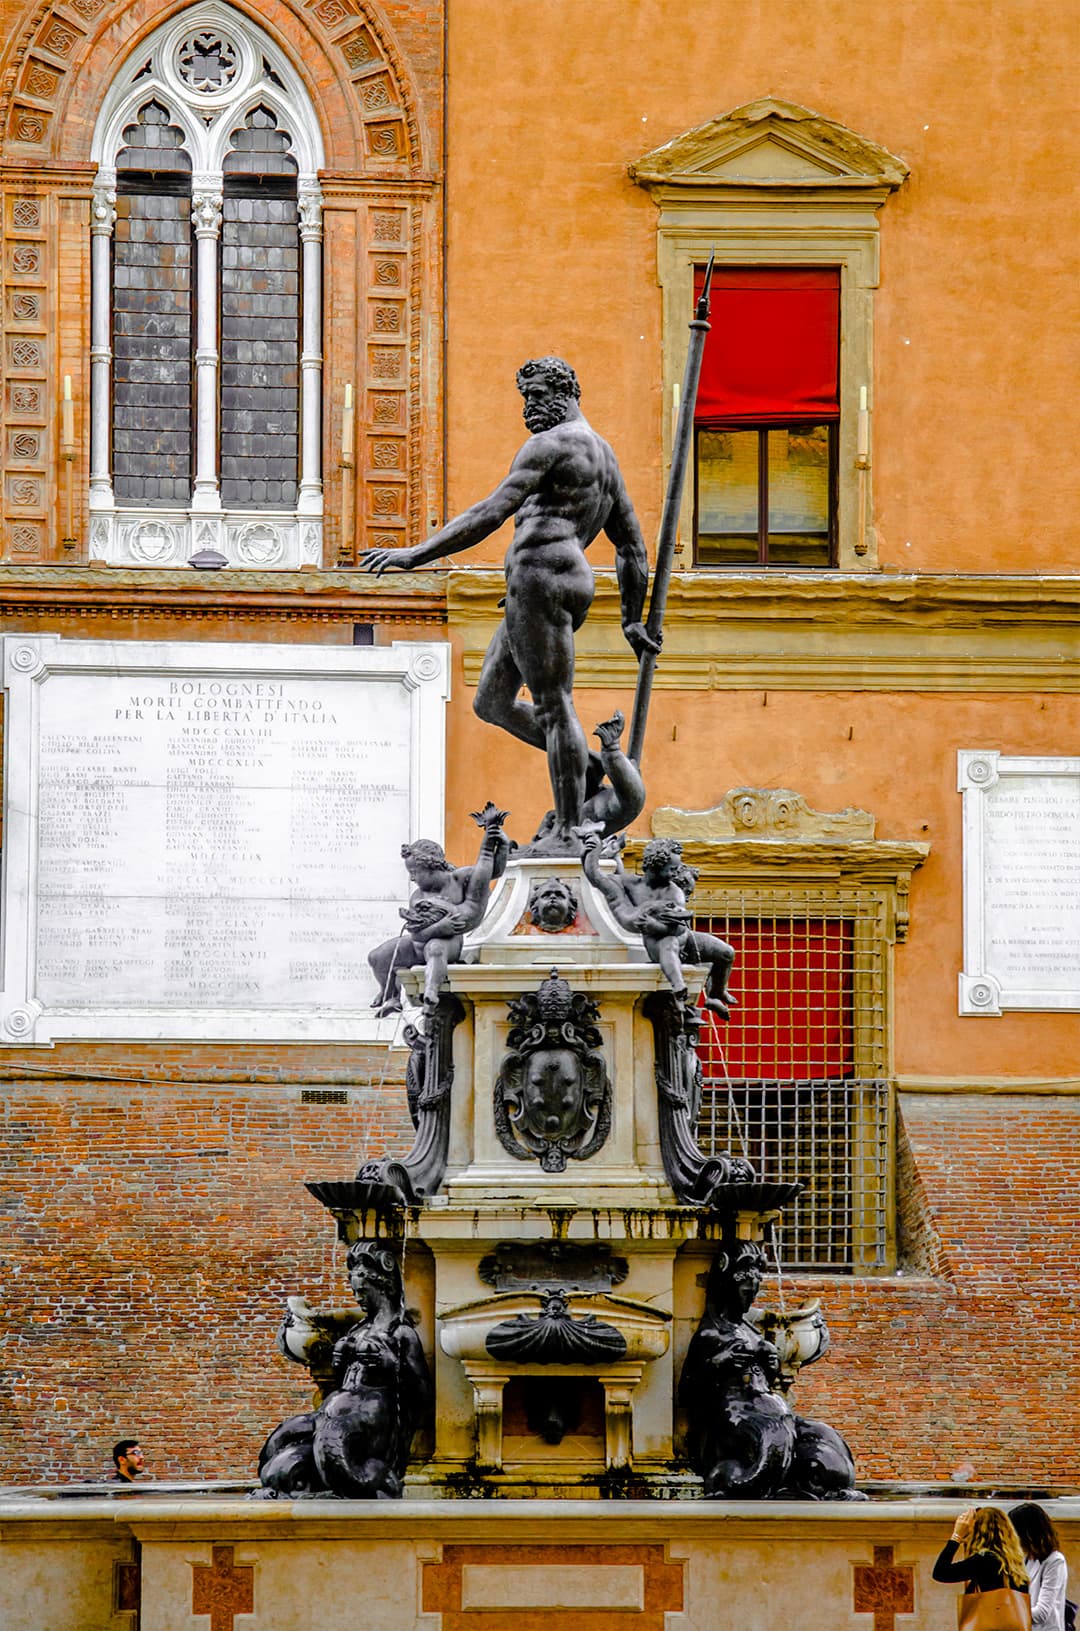 Bologna, Emilia-Romagna (2018)